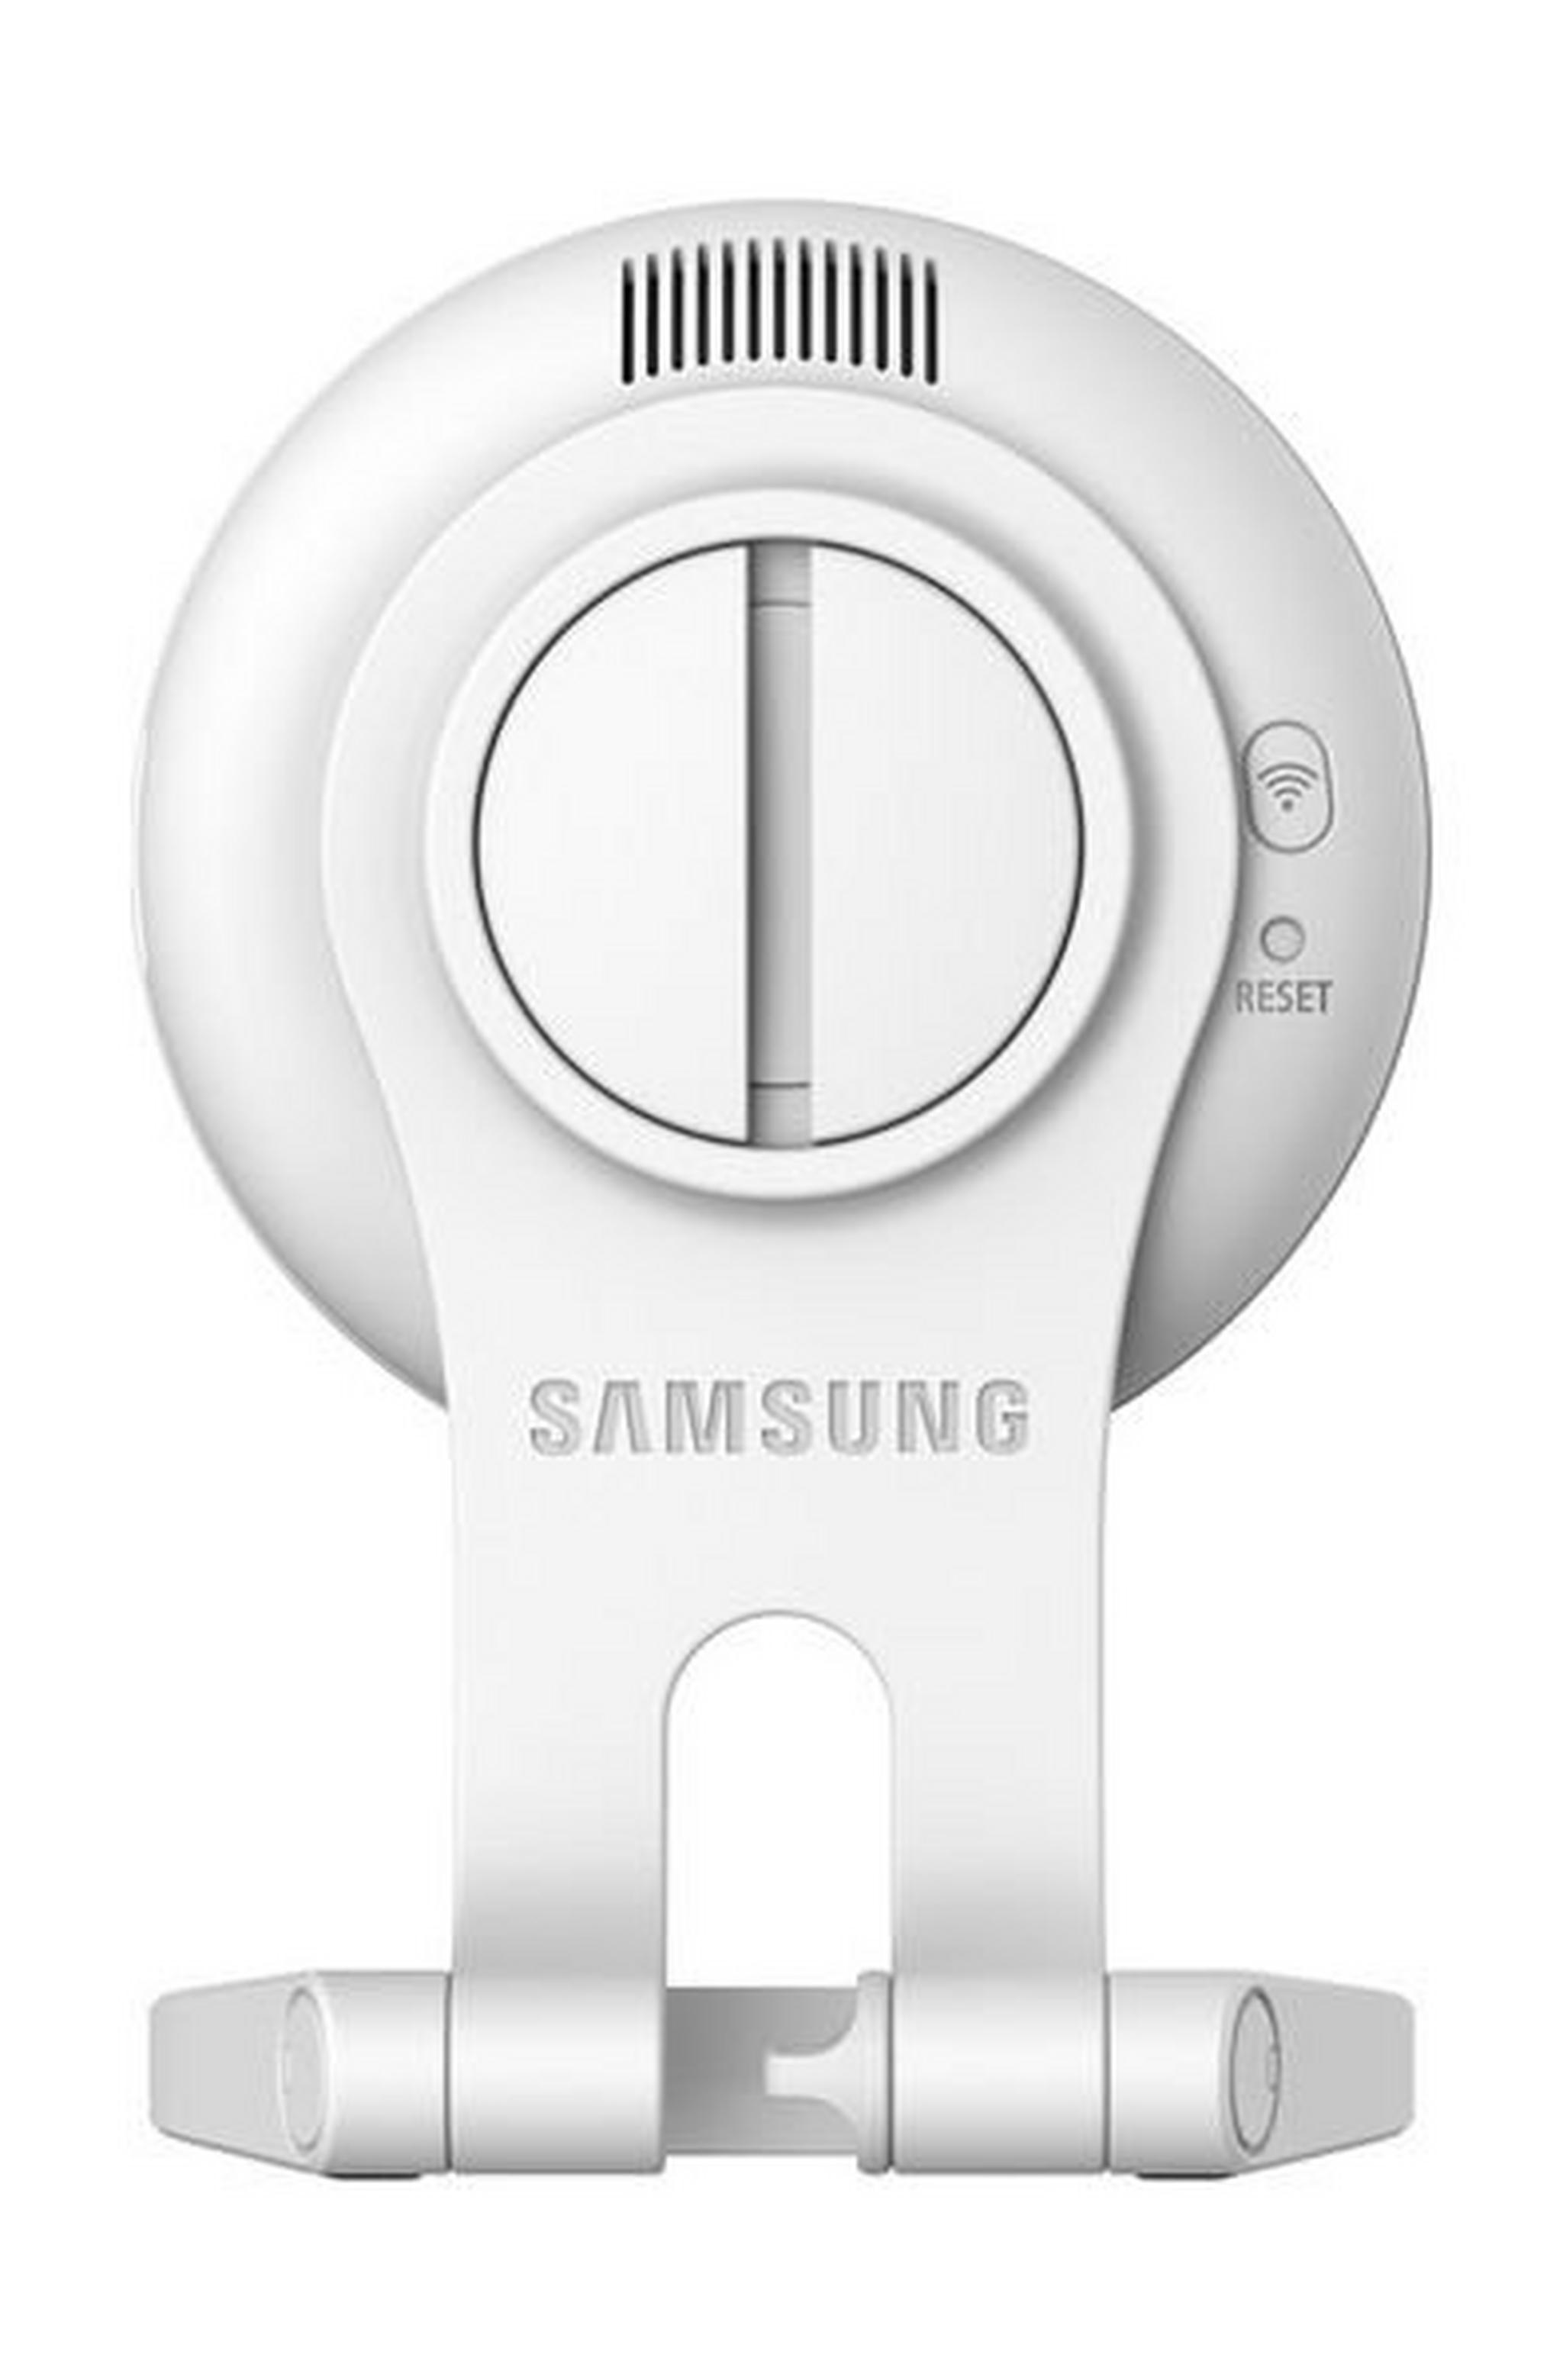 Samsung SmartCam HD Plus 1080p Wi-Fi Camera with Night Vision (SNH-C6417BN) - White